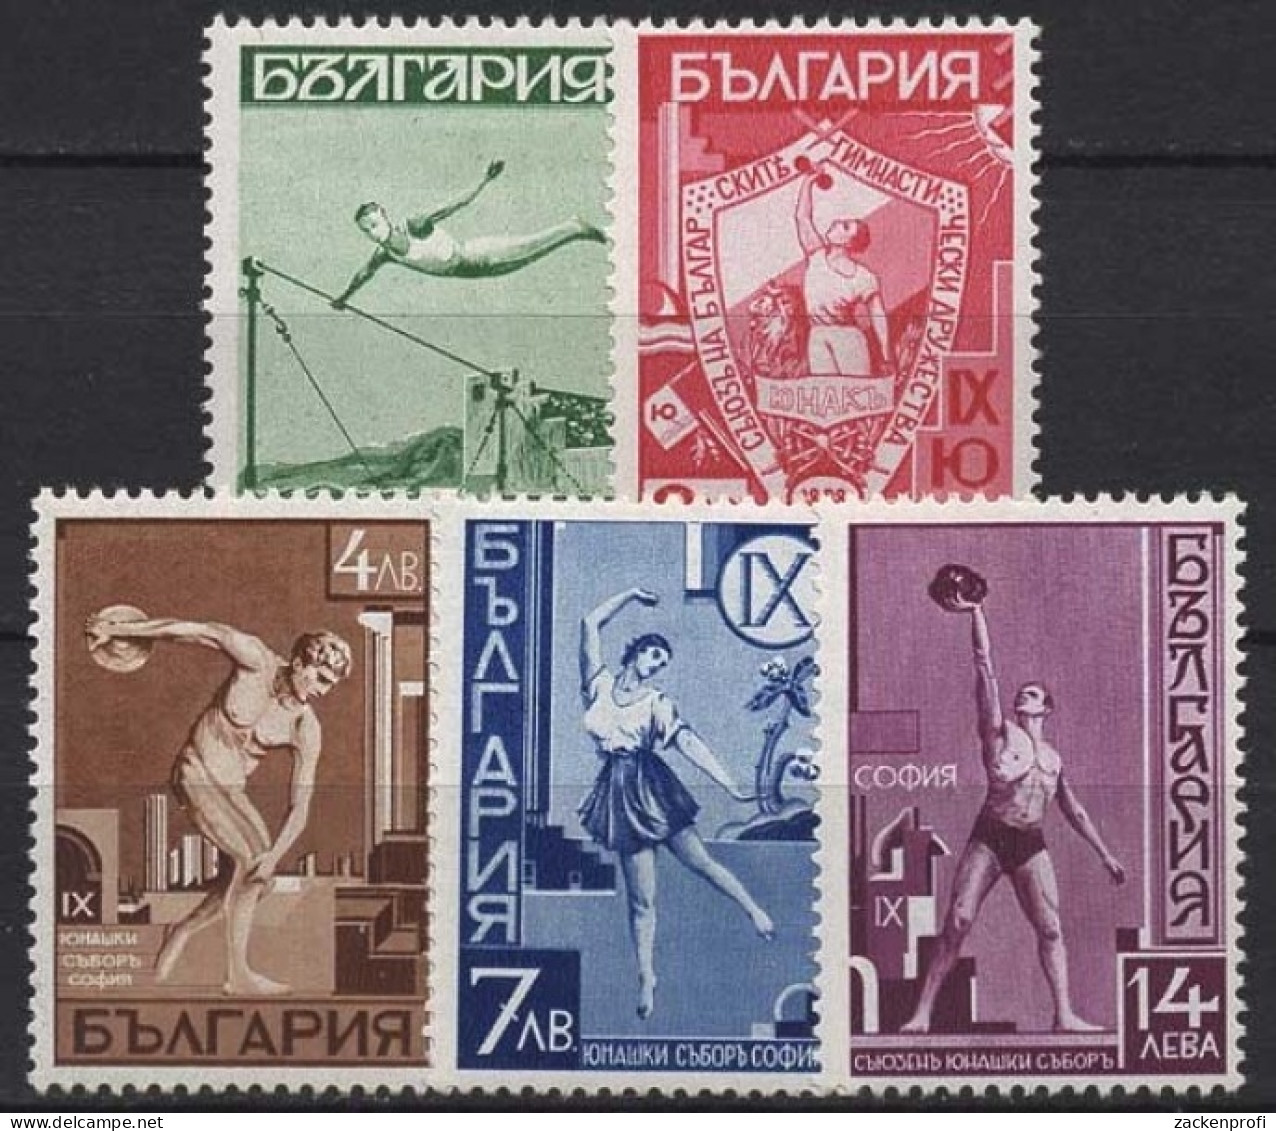 Bulgarien 1939 Kongreß Des Sportverbandes Junak Sofia 360/64 Postfrisch - Neufs